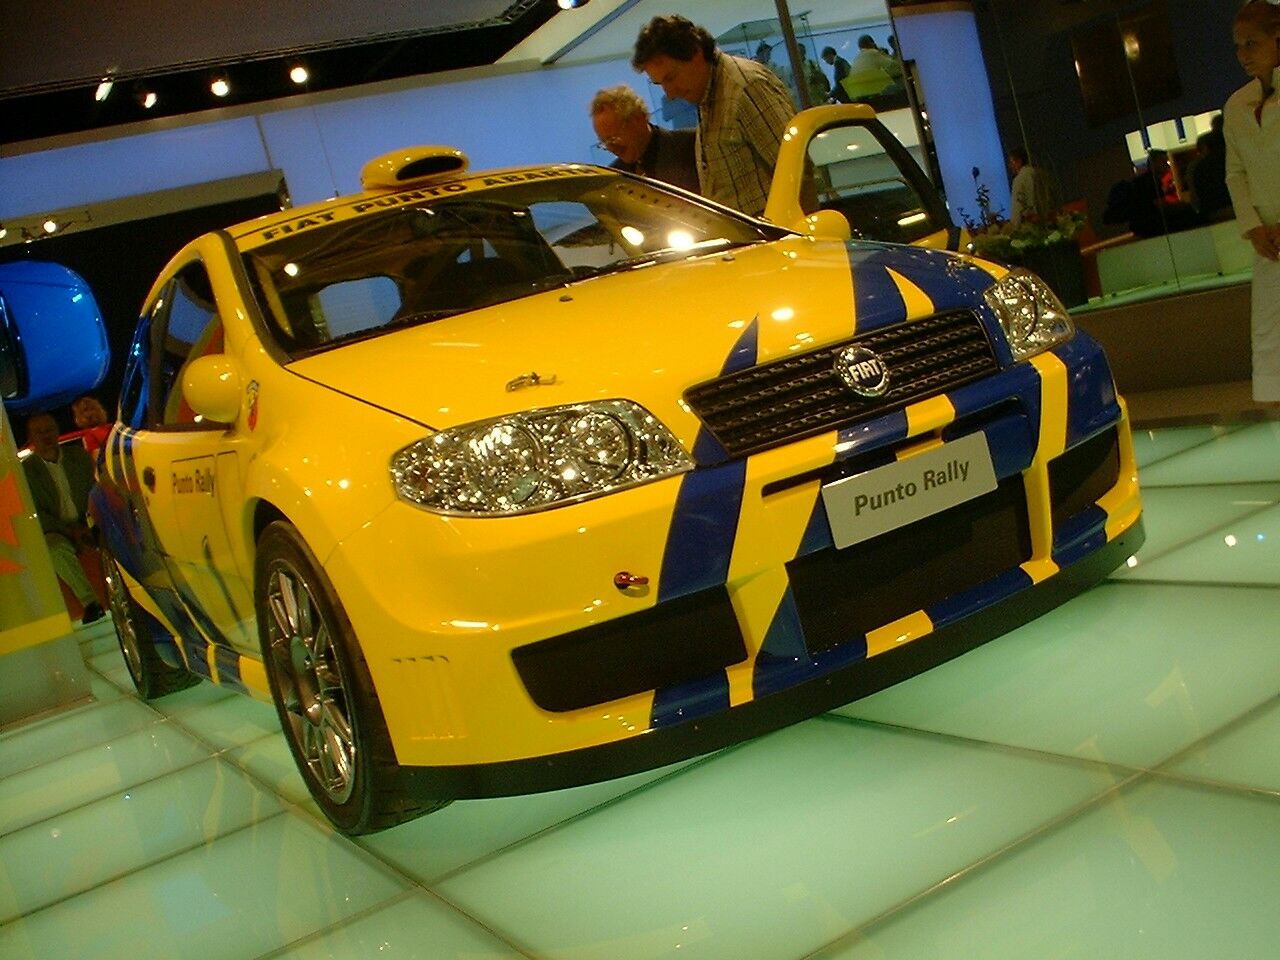 New Fiat Punto Abarth Rally at the 2003 Frankfurt Motor Show